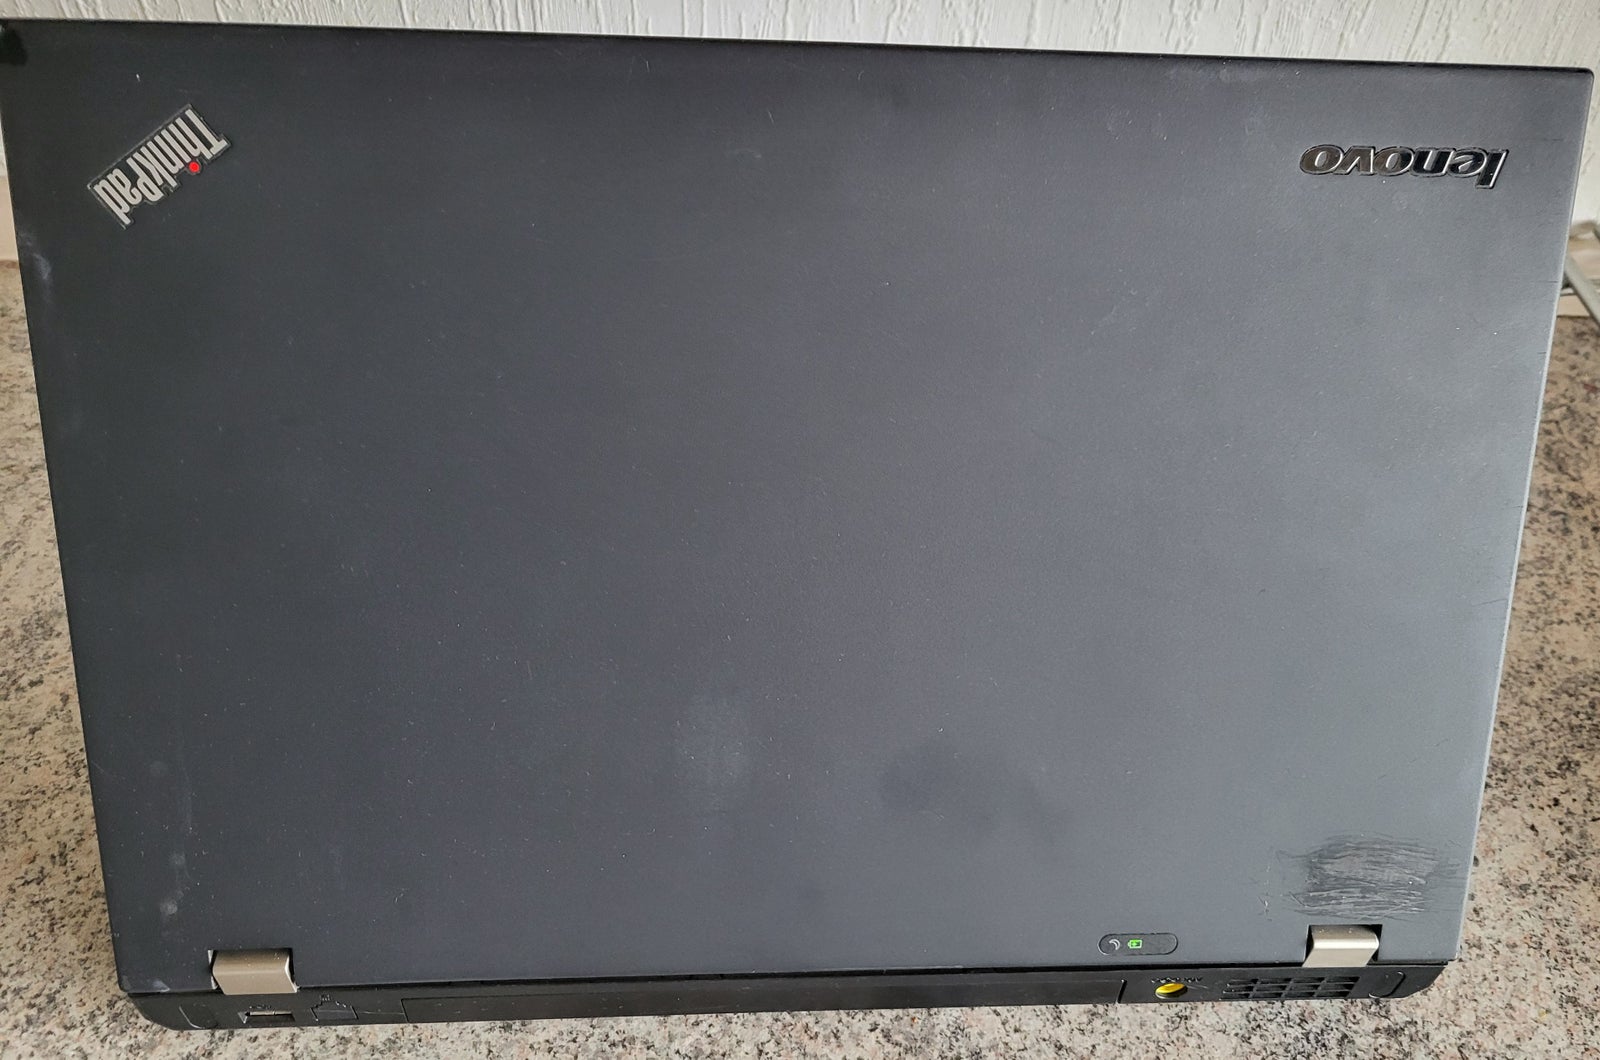 Lenovo ThinkPad T520, IntelCore i5 2520M 2,5 GHz, 8 GB ram